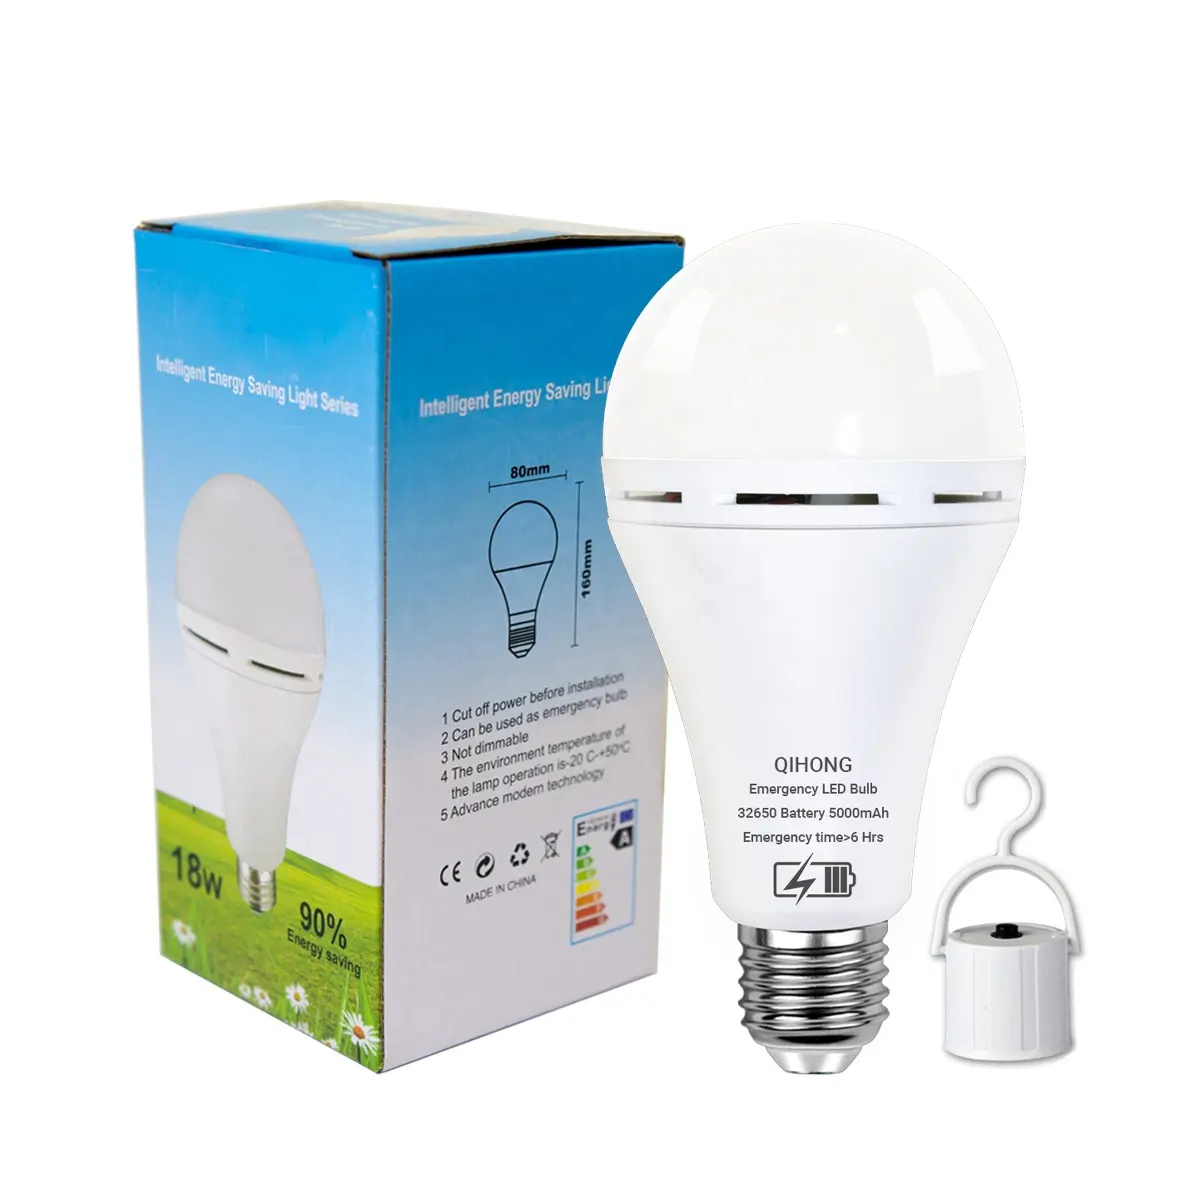 LED Emergency Light Bulbs for Home Power Failure A21 9W E26 E27 80W Equivalent 800 Lumen LED Rechargeable Light Bombillo Bulbs